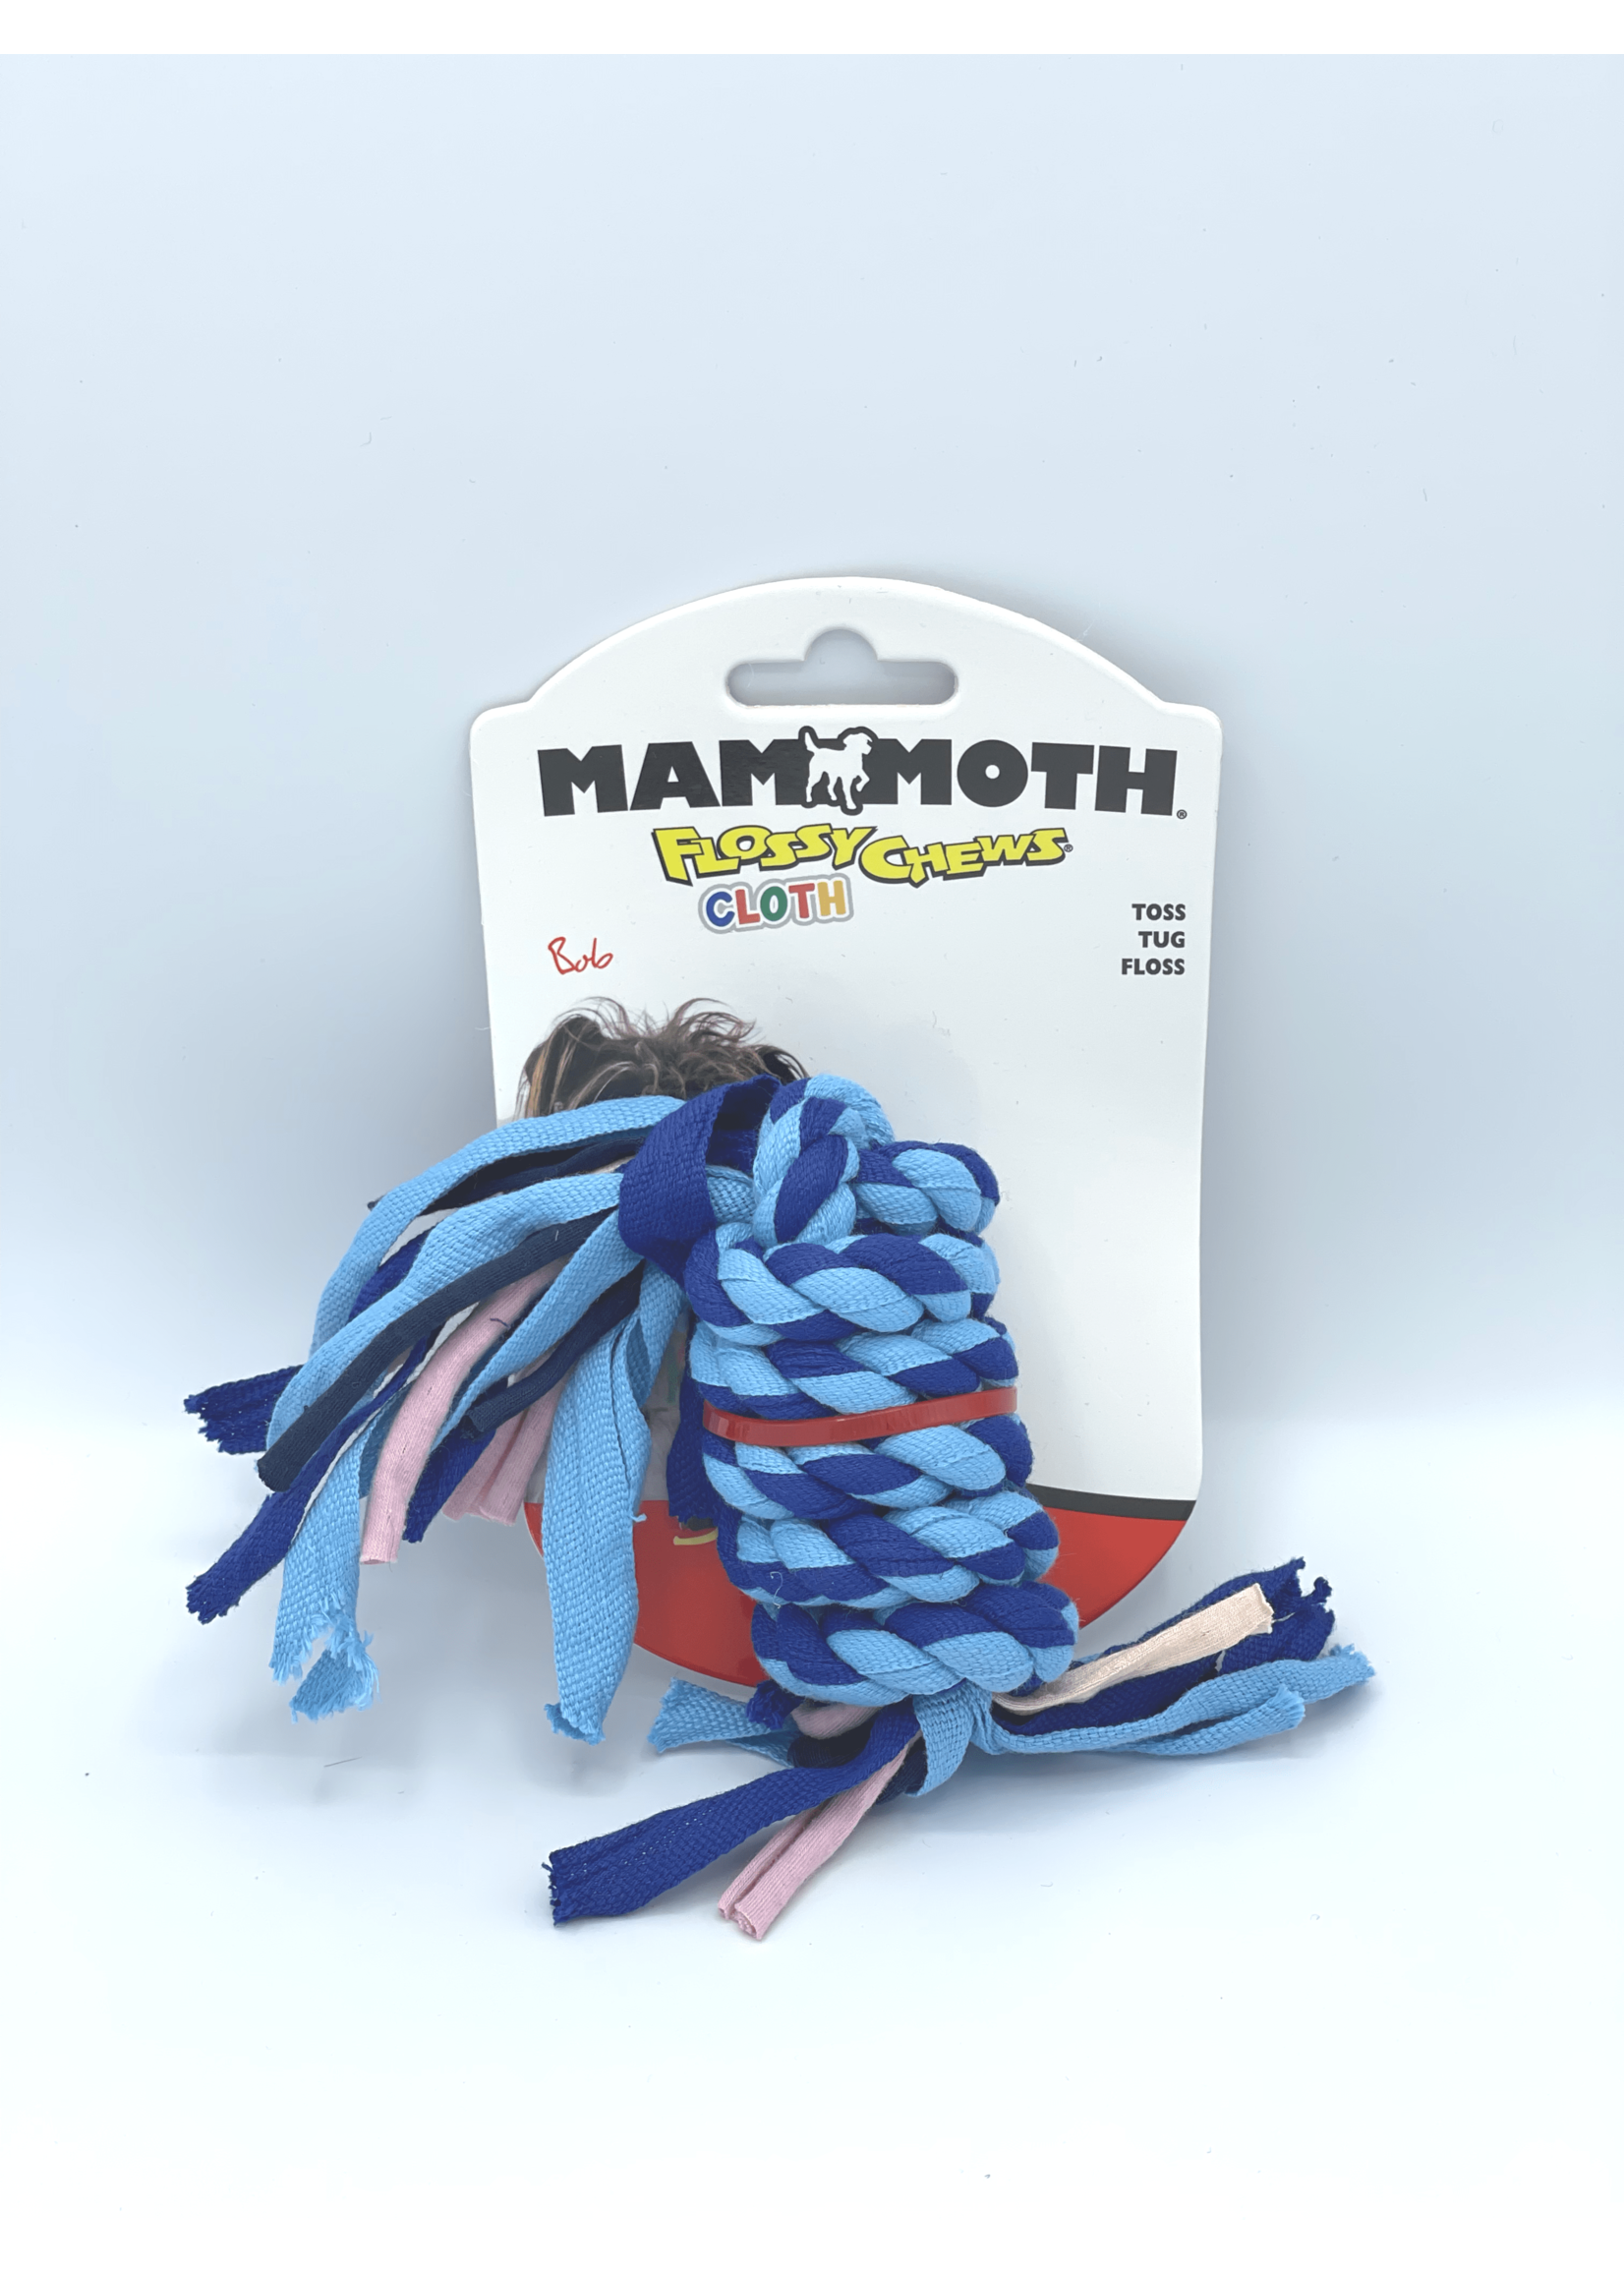 Mammoth Mammoth Flossy Chews Cloth Rope Small